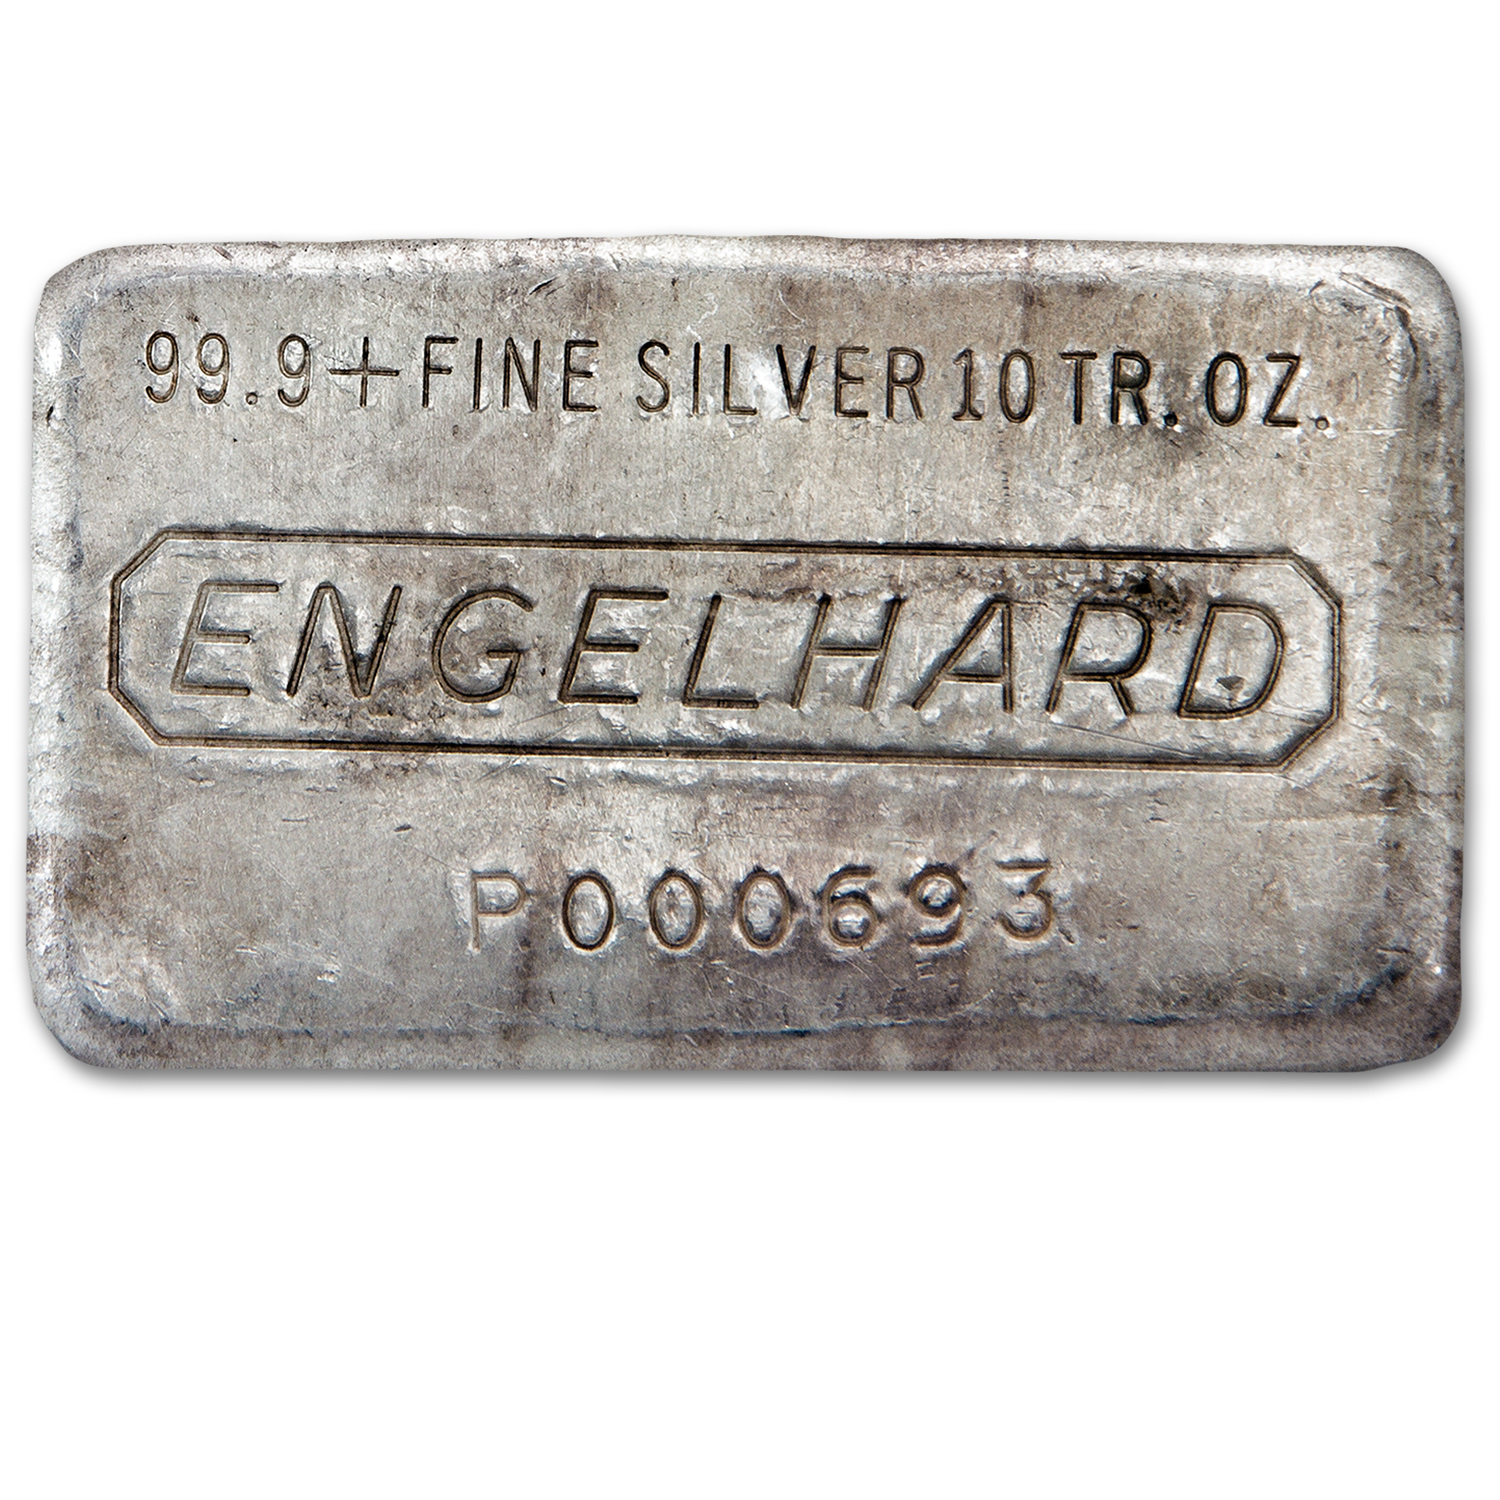 engelhard silver bar serial number p333735